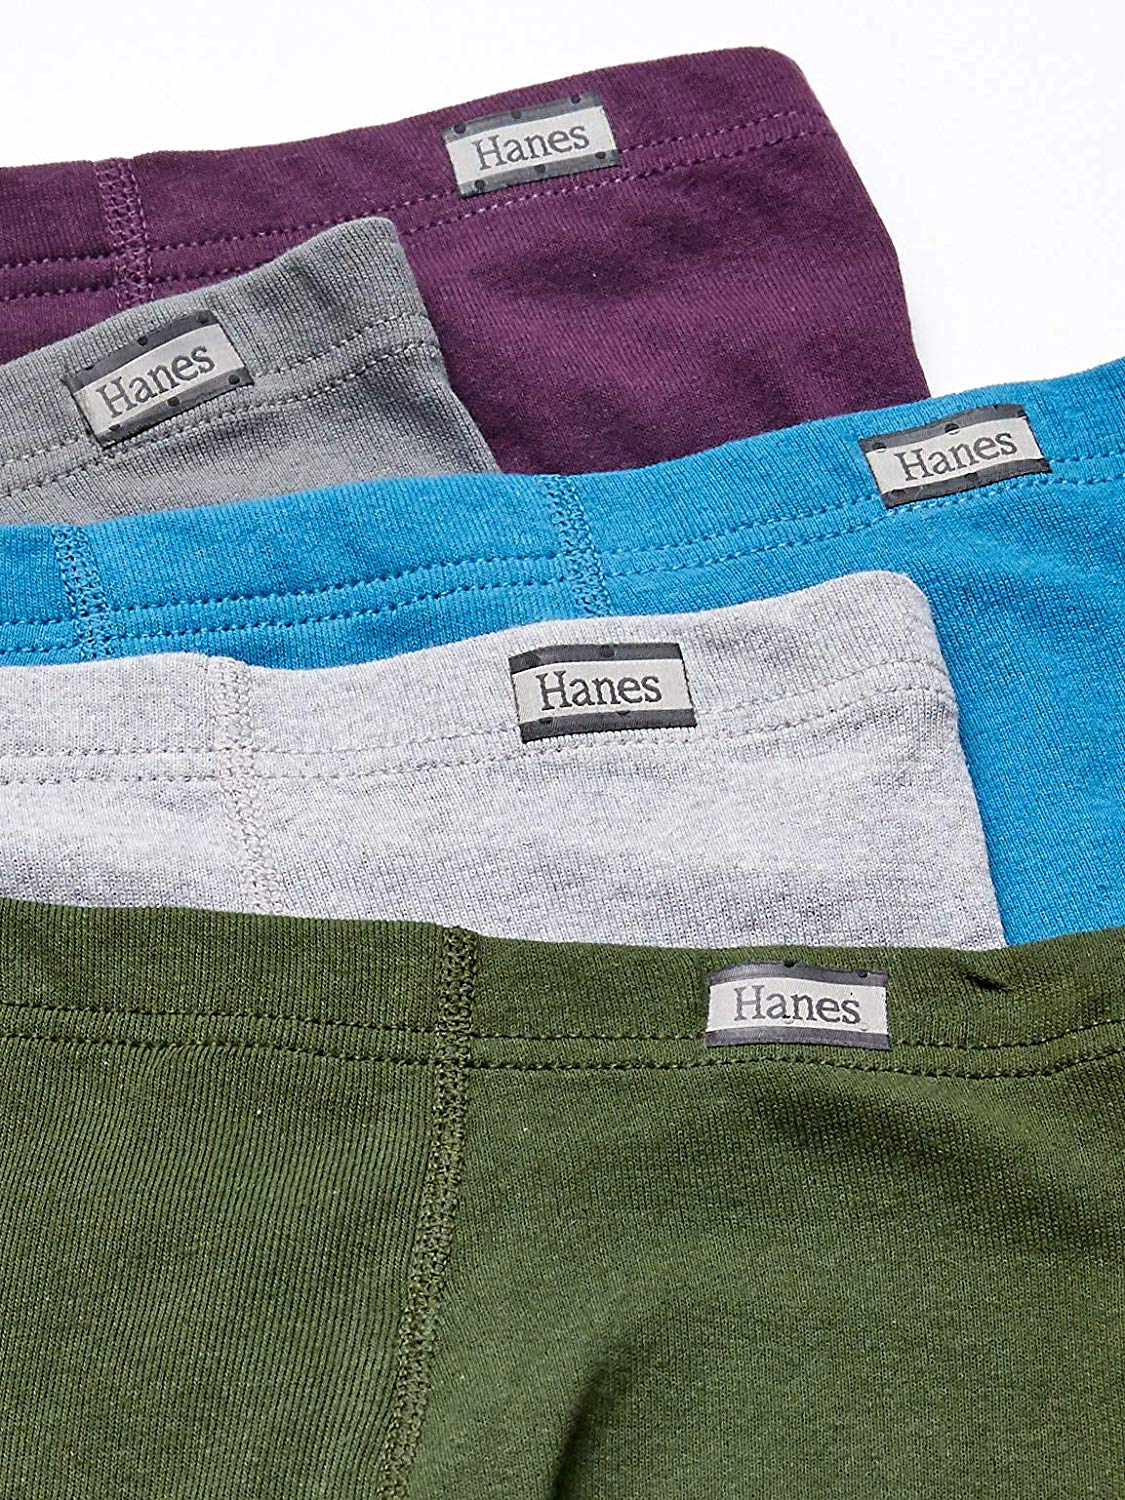 Hanes Men's 5-Pack Comfort Soft Boxer Briefs, Assorted,, MultiColor ...